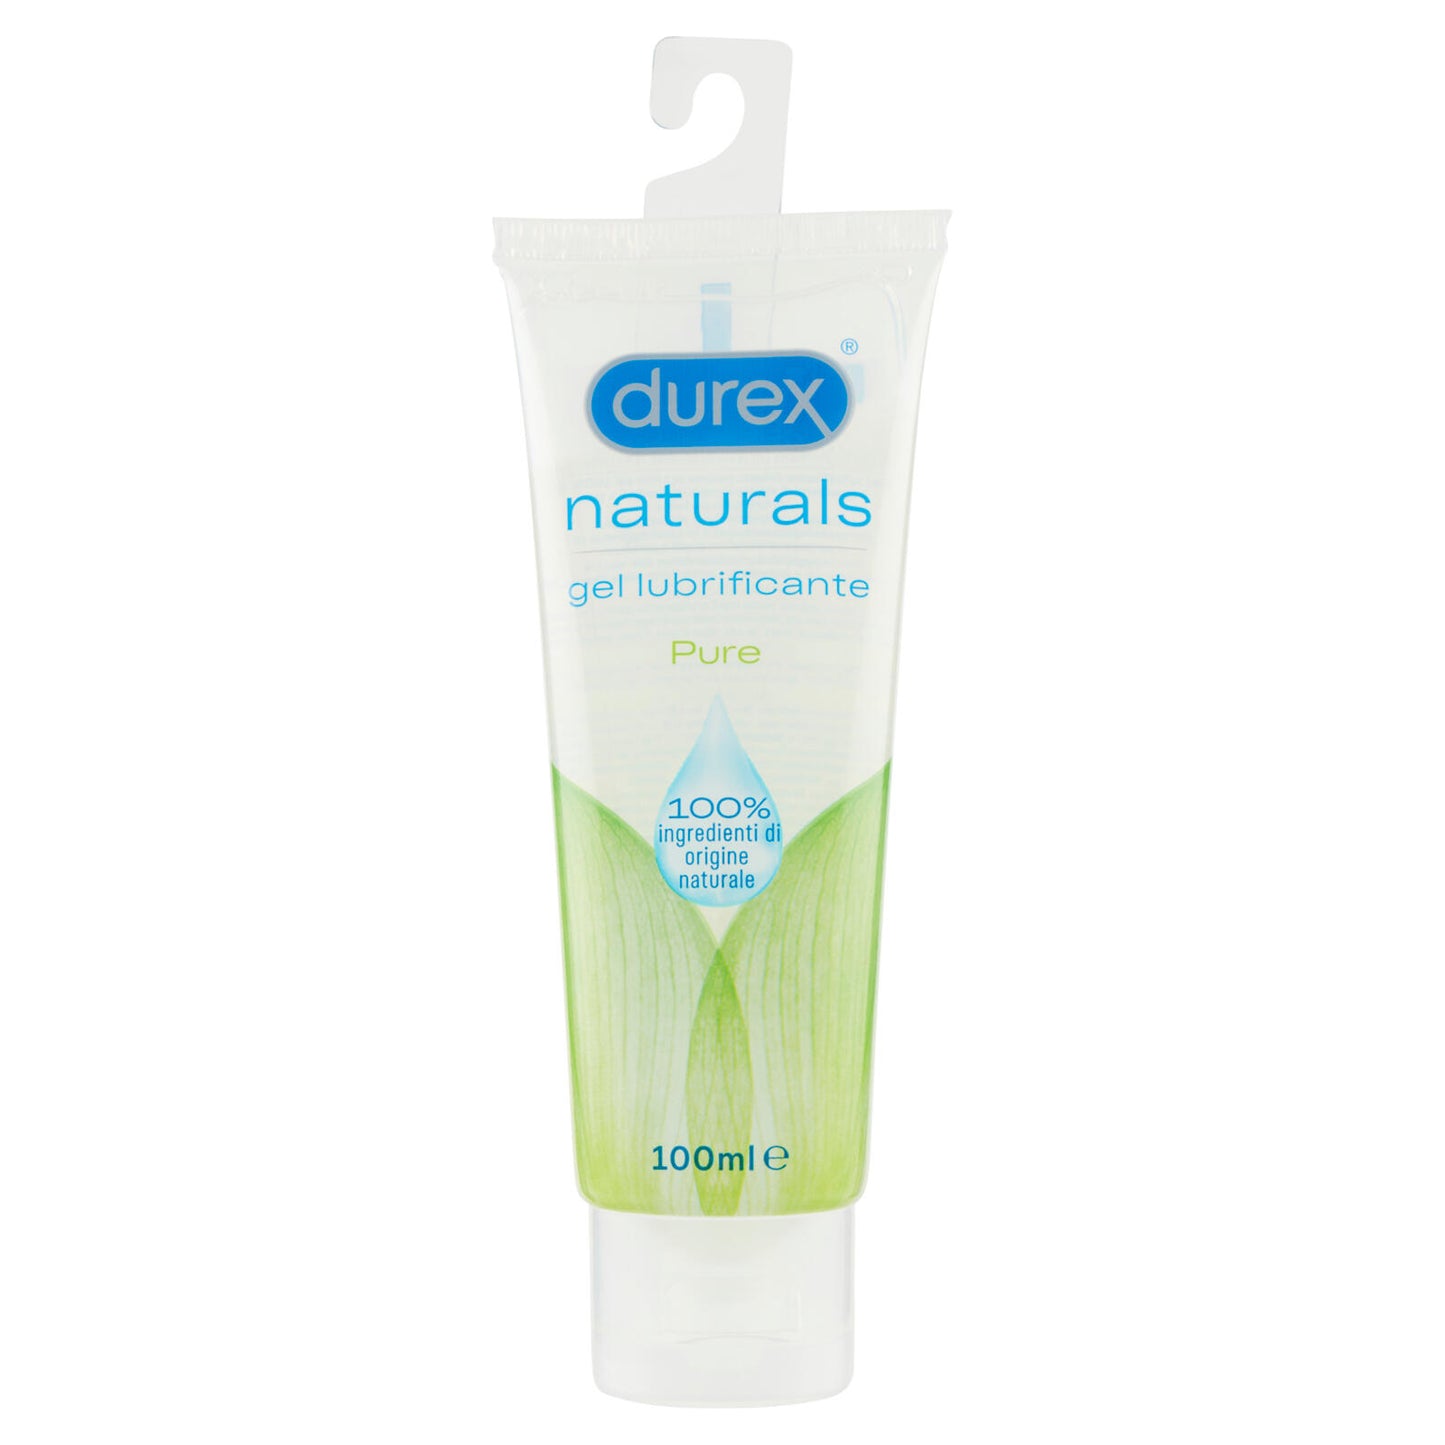 Durex Naturals Pure Gel Lubrificante Intimo, 100% Ingredienti di Origine Naturale,100ml